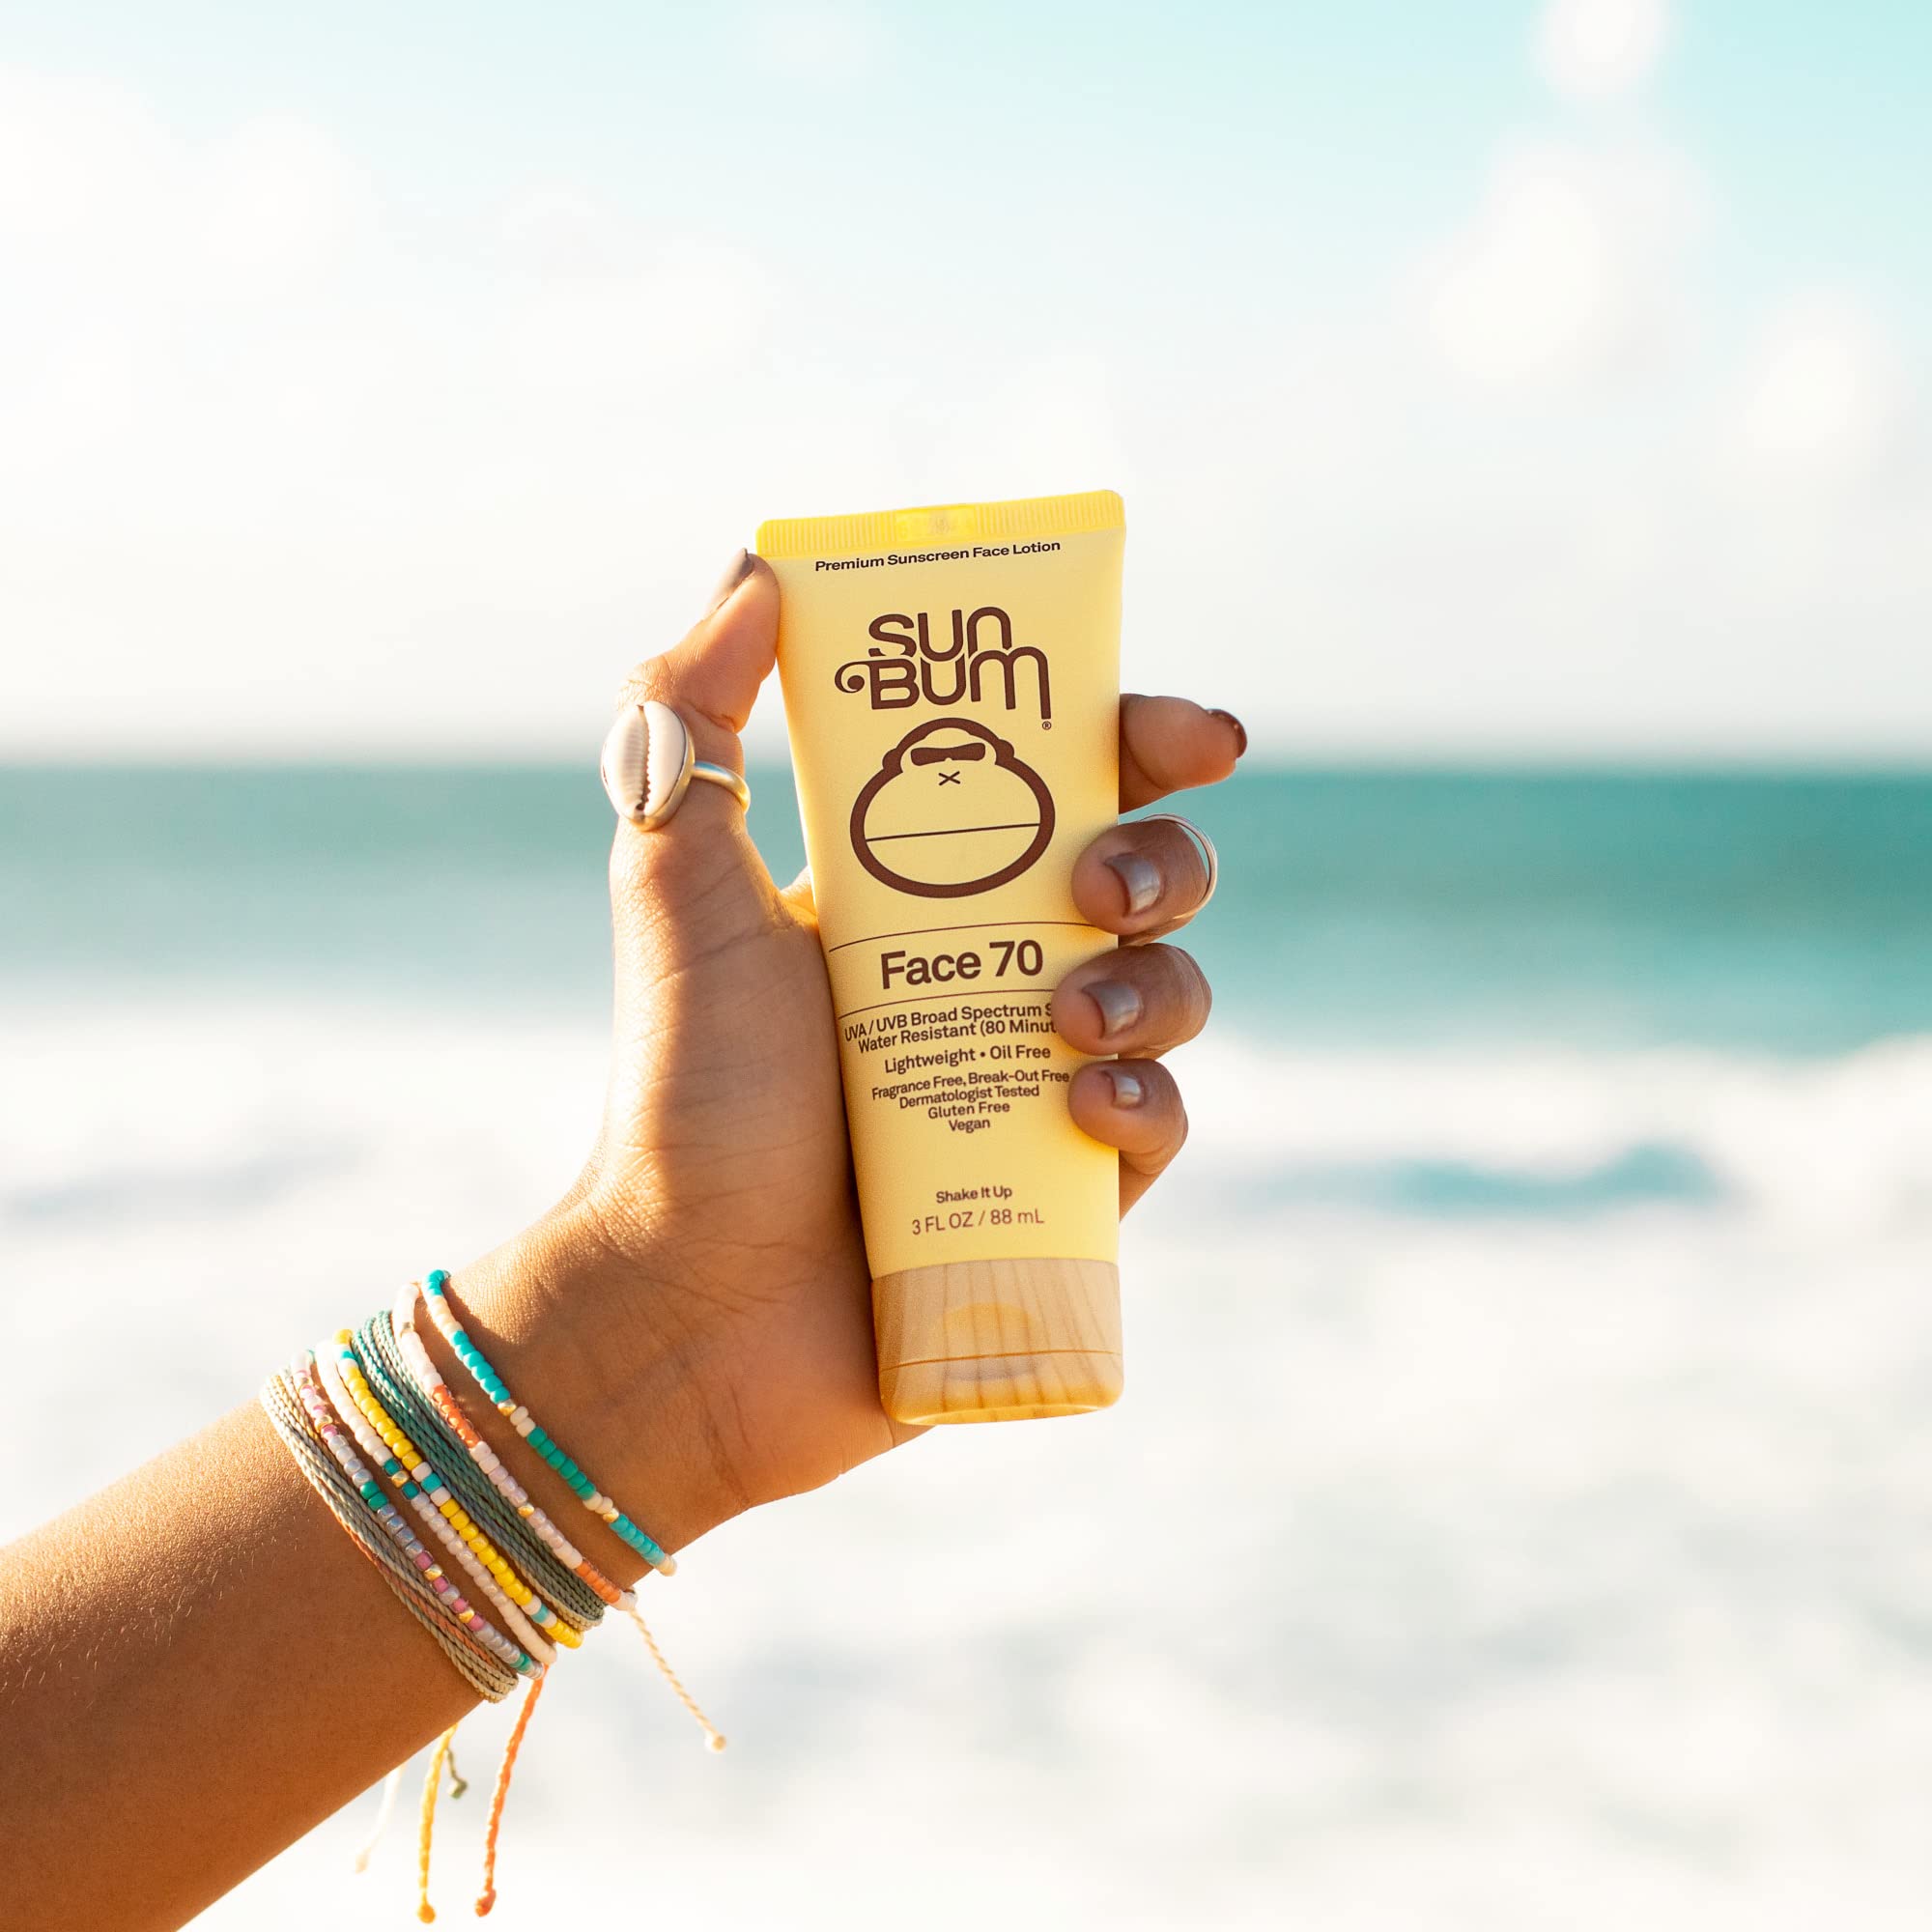 Sun Bum Original SPF 70 Sunscreen Face Lotion | Vegan and Hawaii 104 Reef Act Compliant (Octinoxate & Oxybenzone Free) Broad Spectrum Fragrance-Free Moisturizing UVA/UVB Sunscreen with Vitamin E|3oz